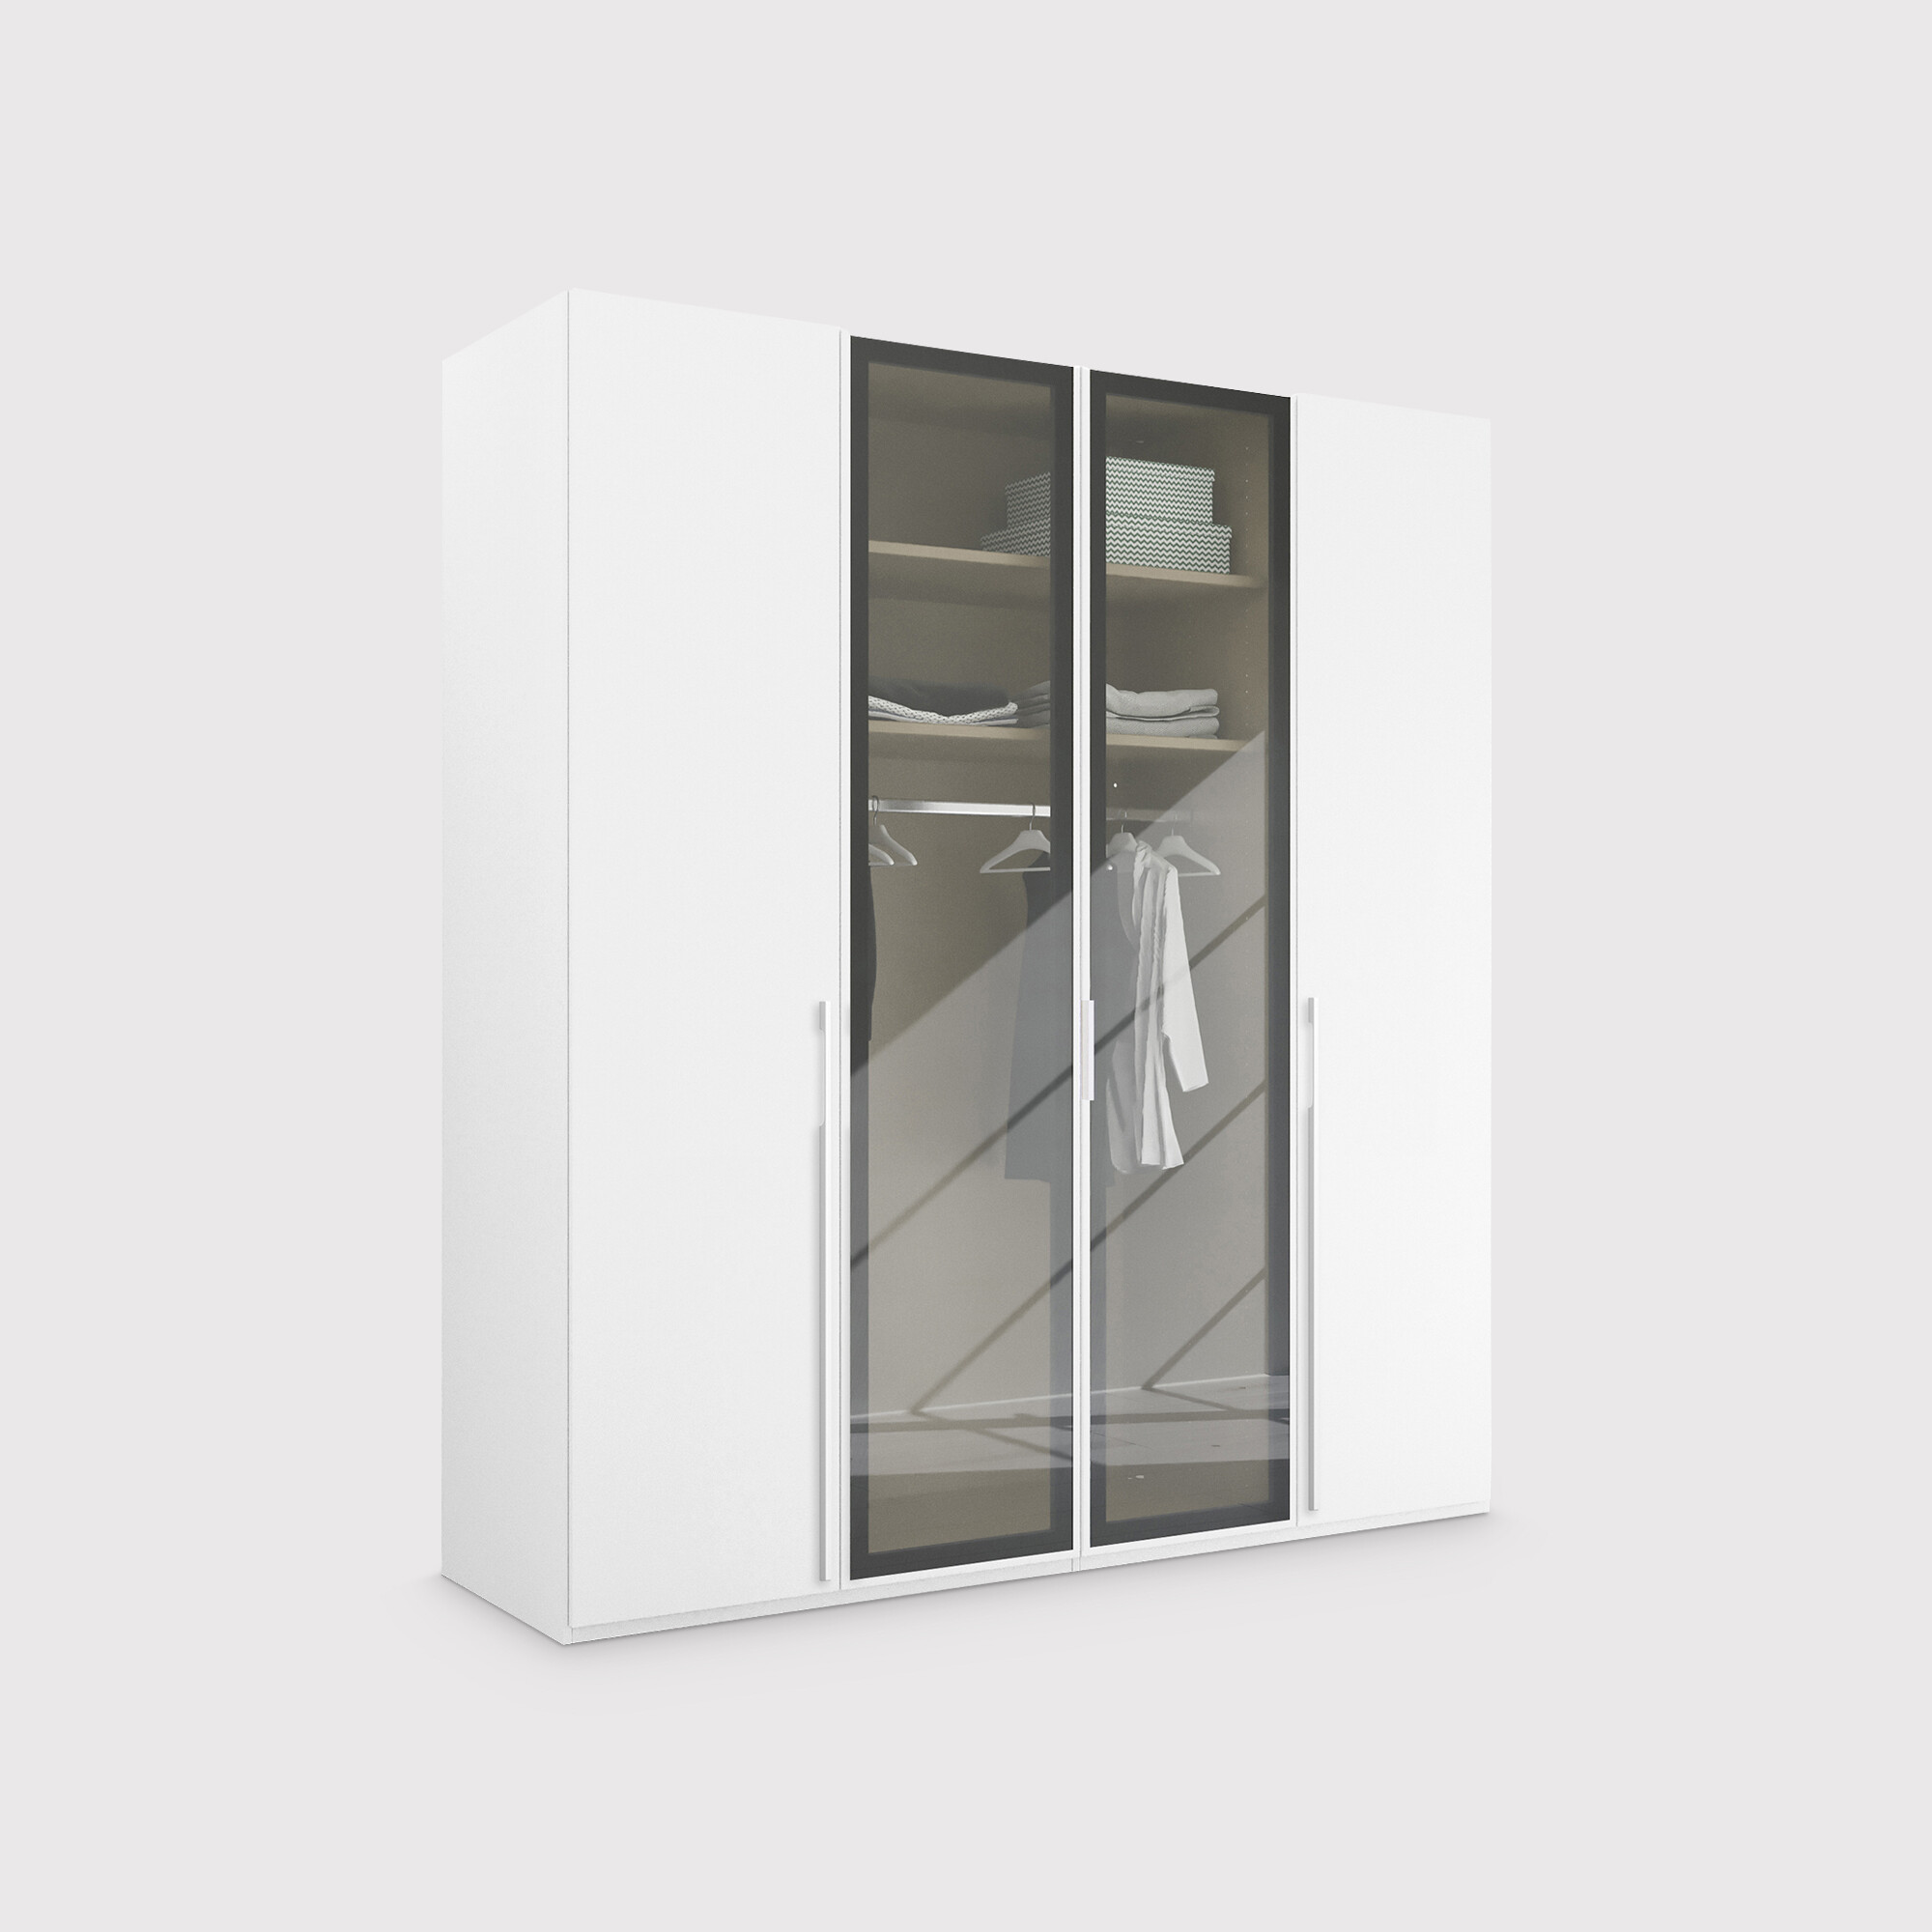 Kacey 4 Door Wardrobe 2 Glass Doors H223cm, White Wood | Barker & Stonehouse